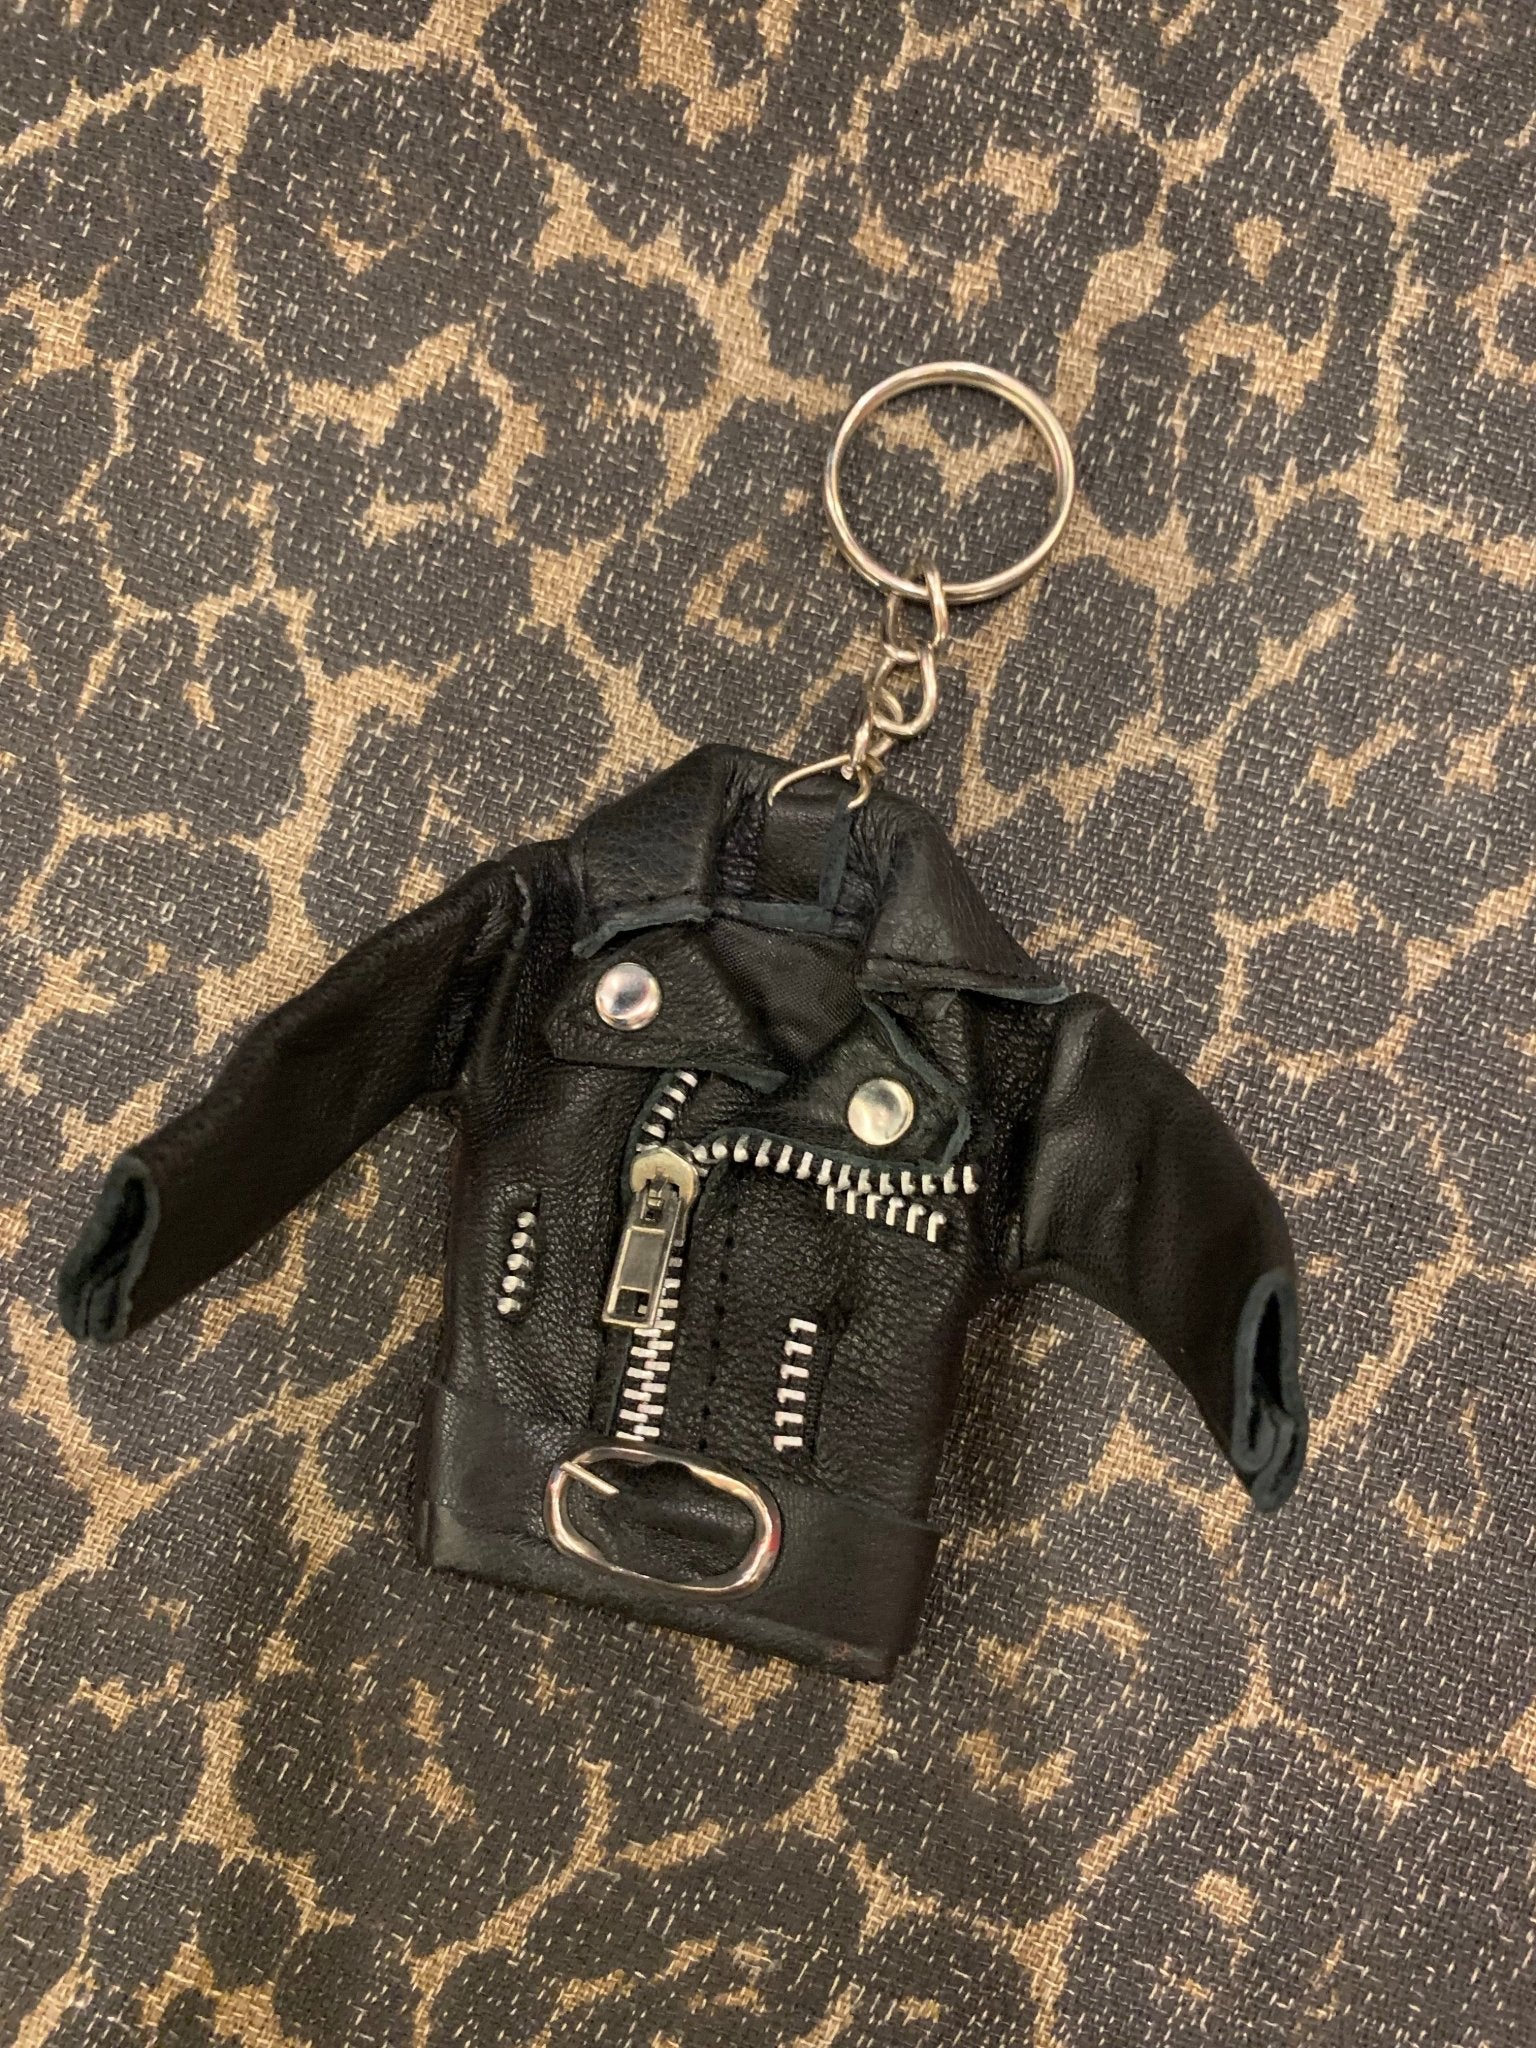 Leather Jacket Keychain - The Nightshift